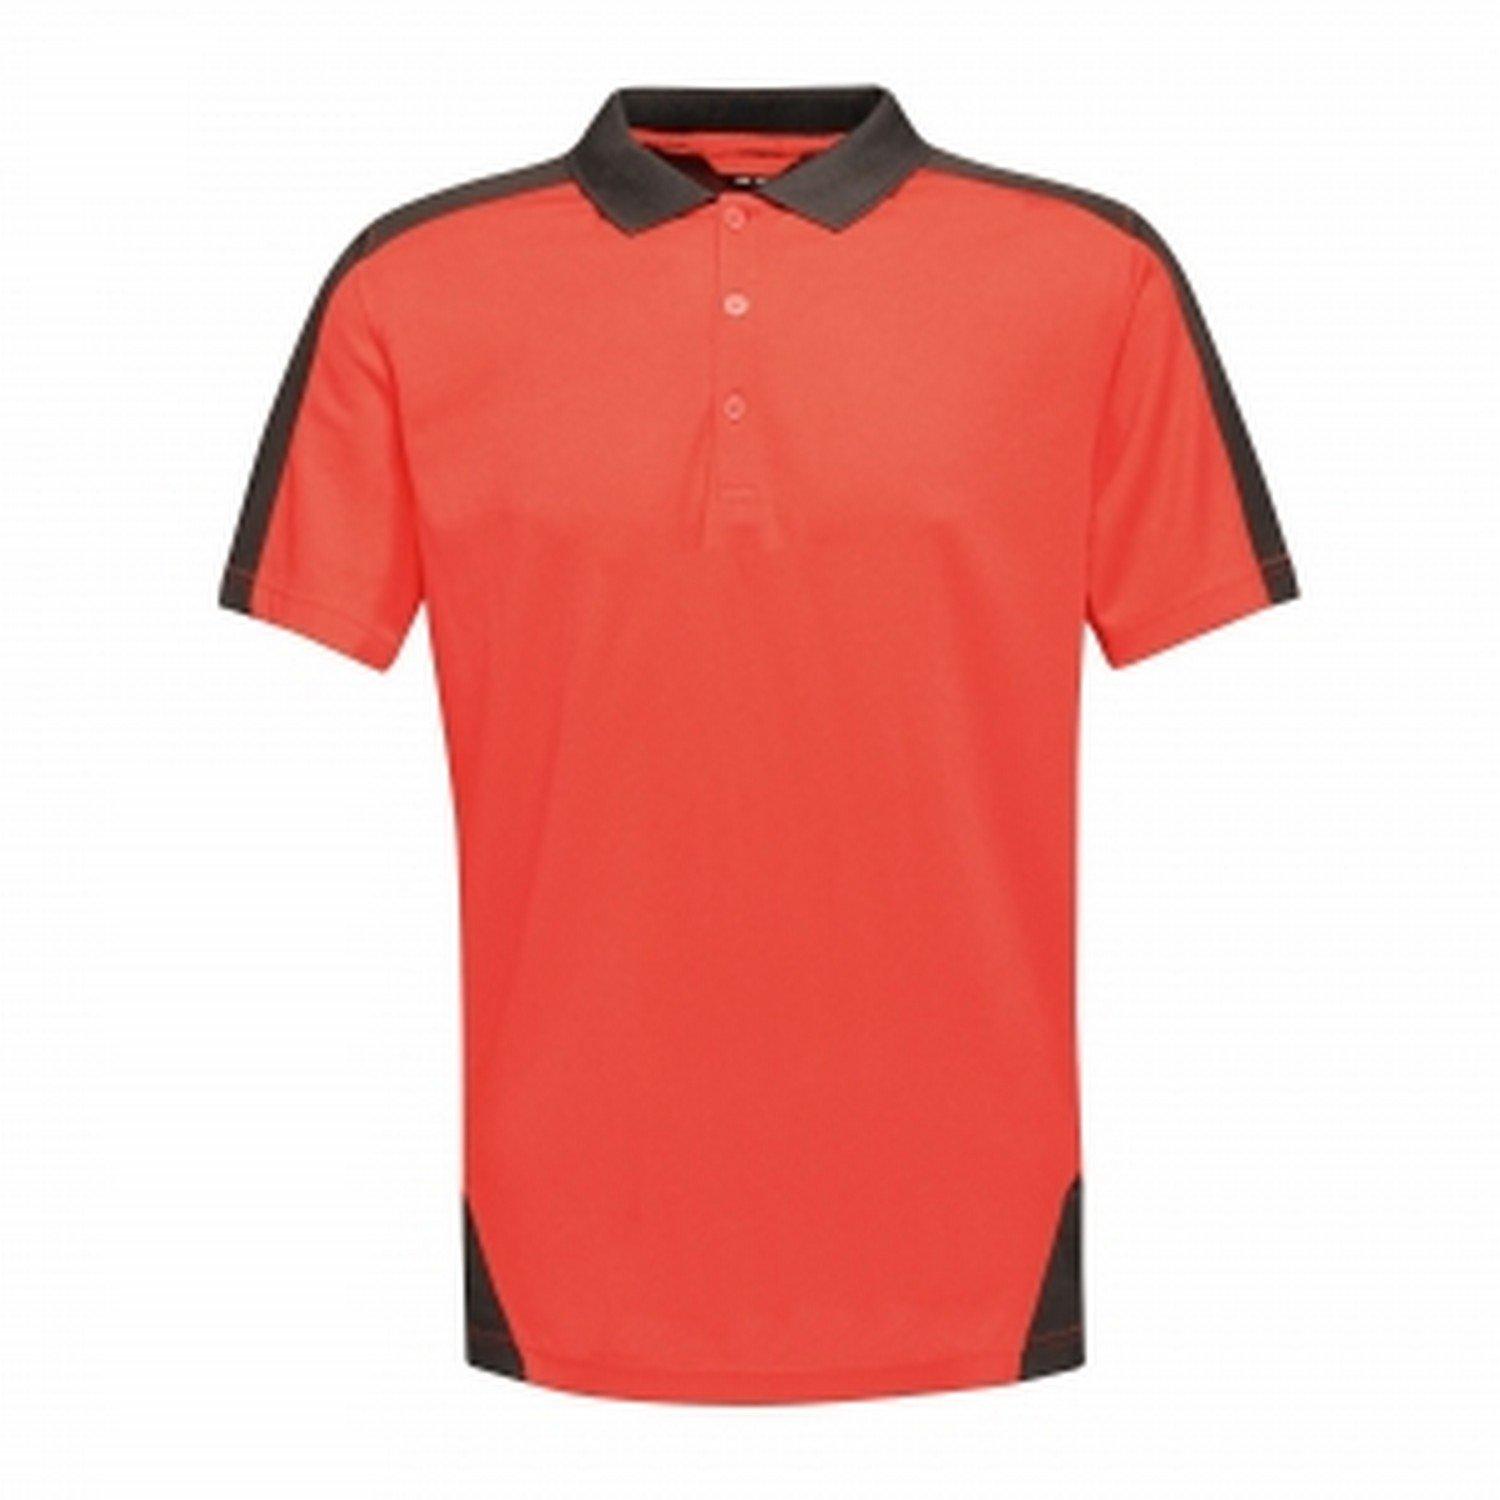 Poloshirt Contrast Coolweave Herren Rot Bunt S von Regatta